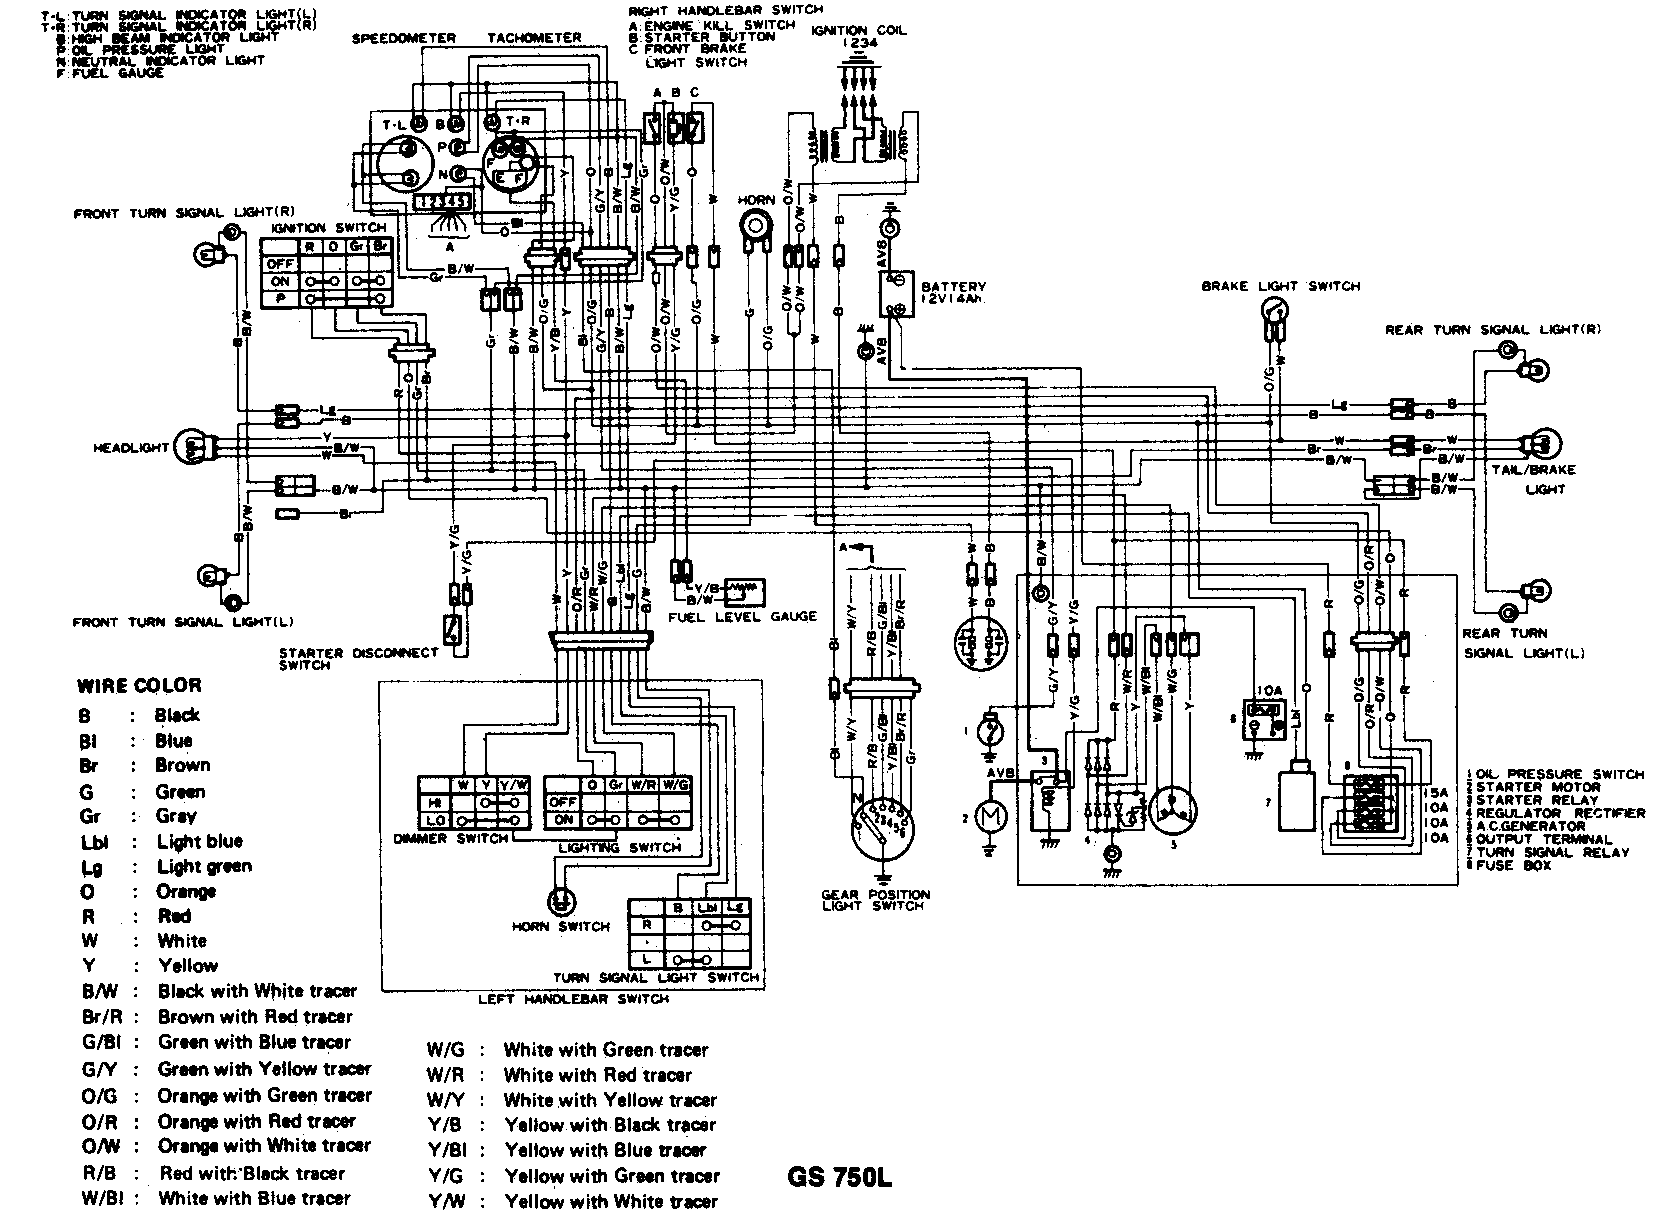 1979 gs750 wiring diagram